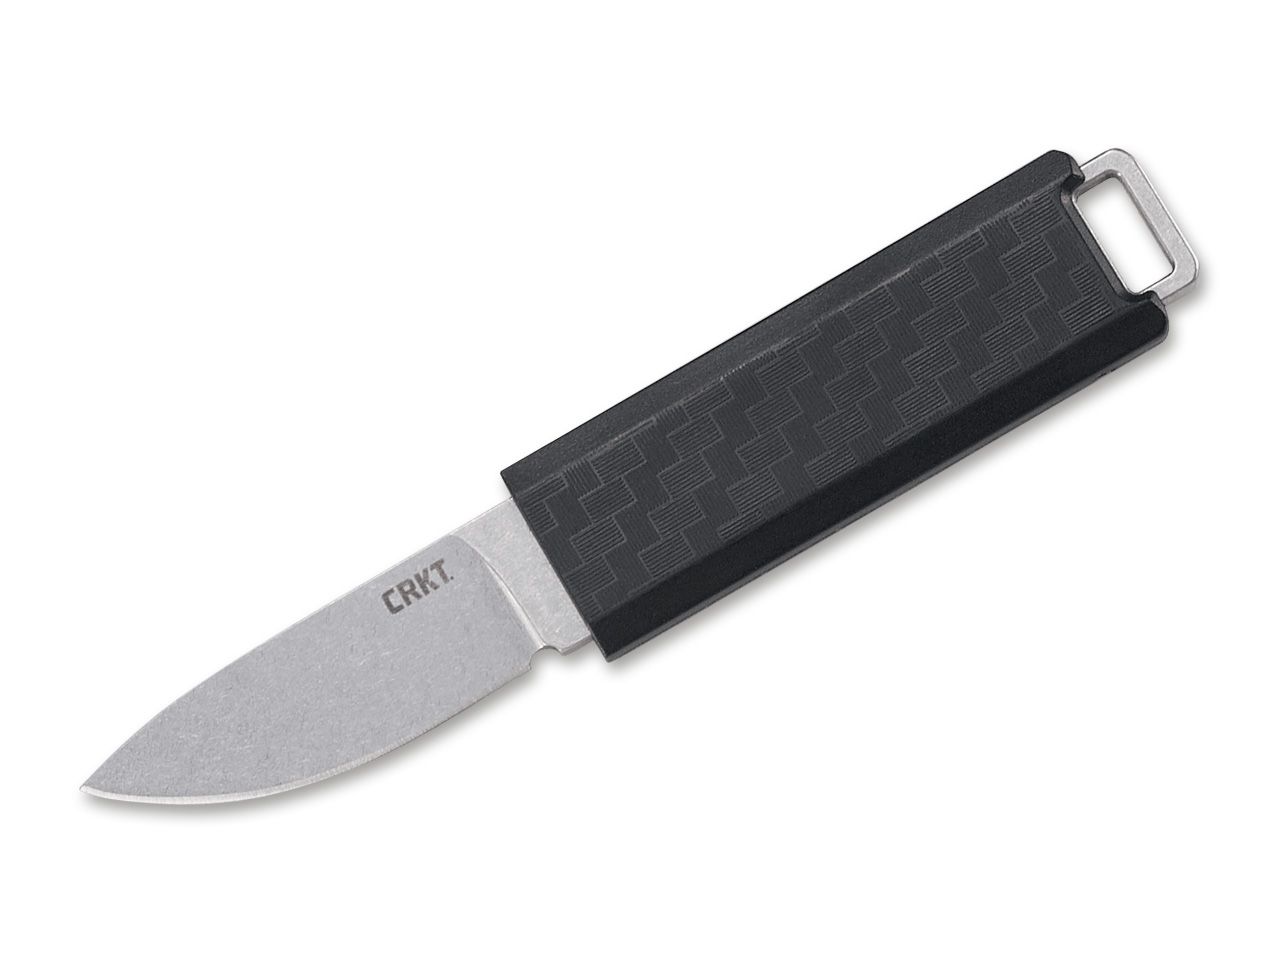 Scribe Black kompaktes feststehendes Messer von CRKT